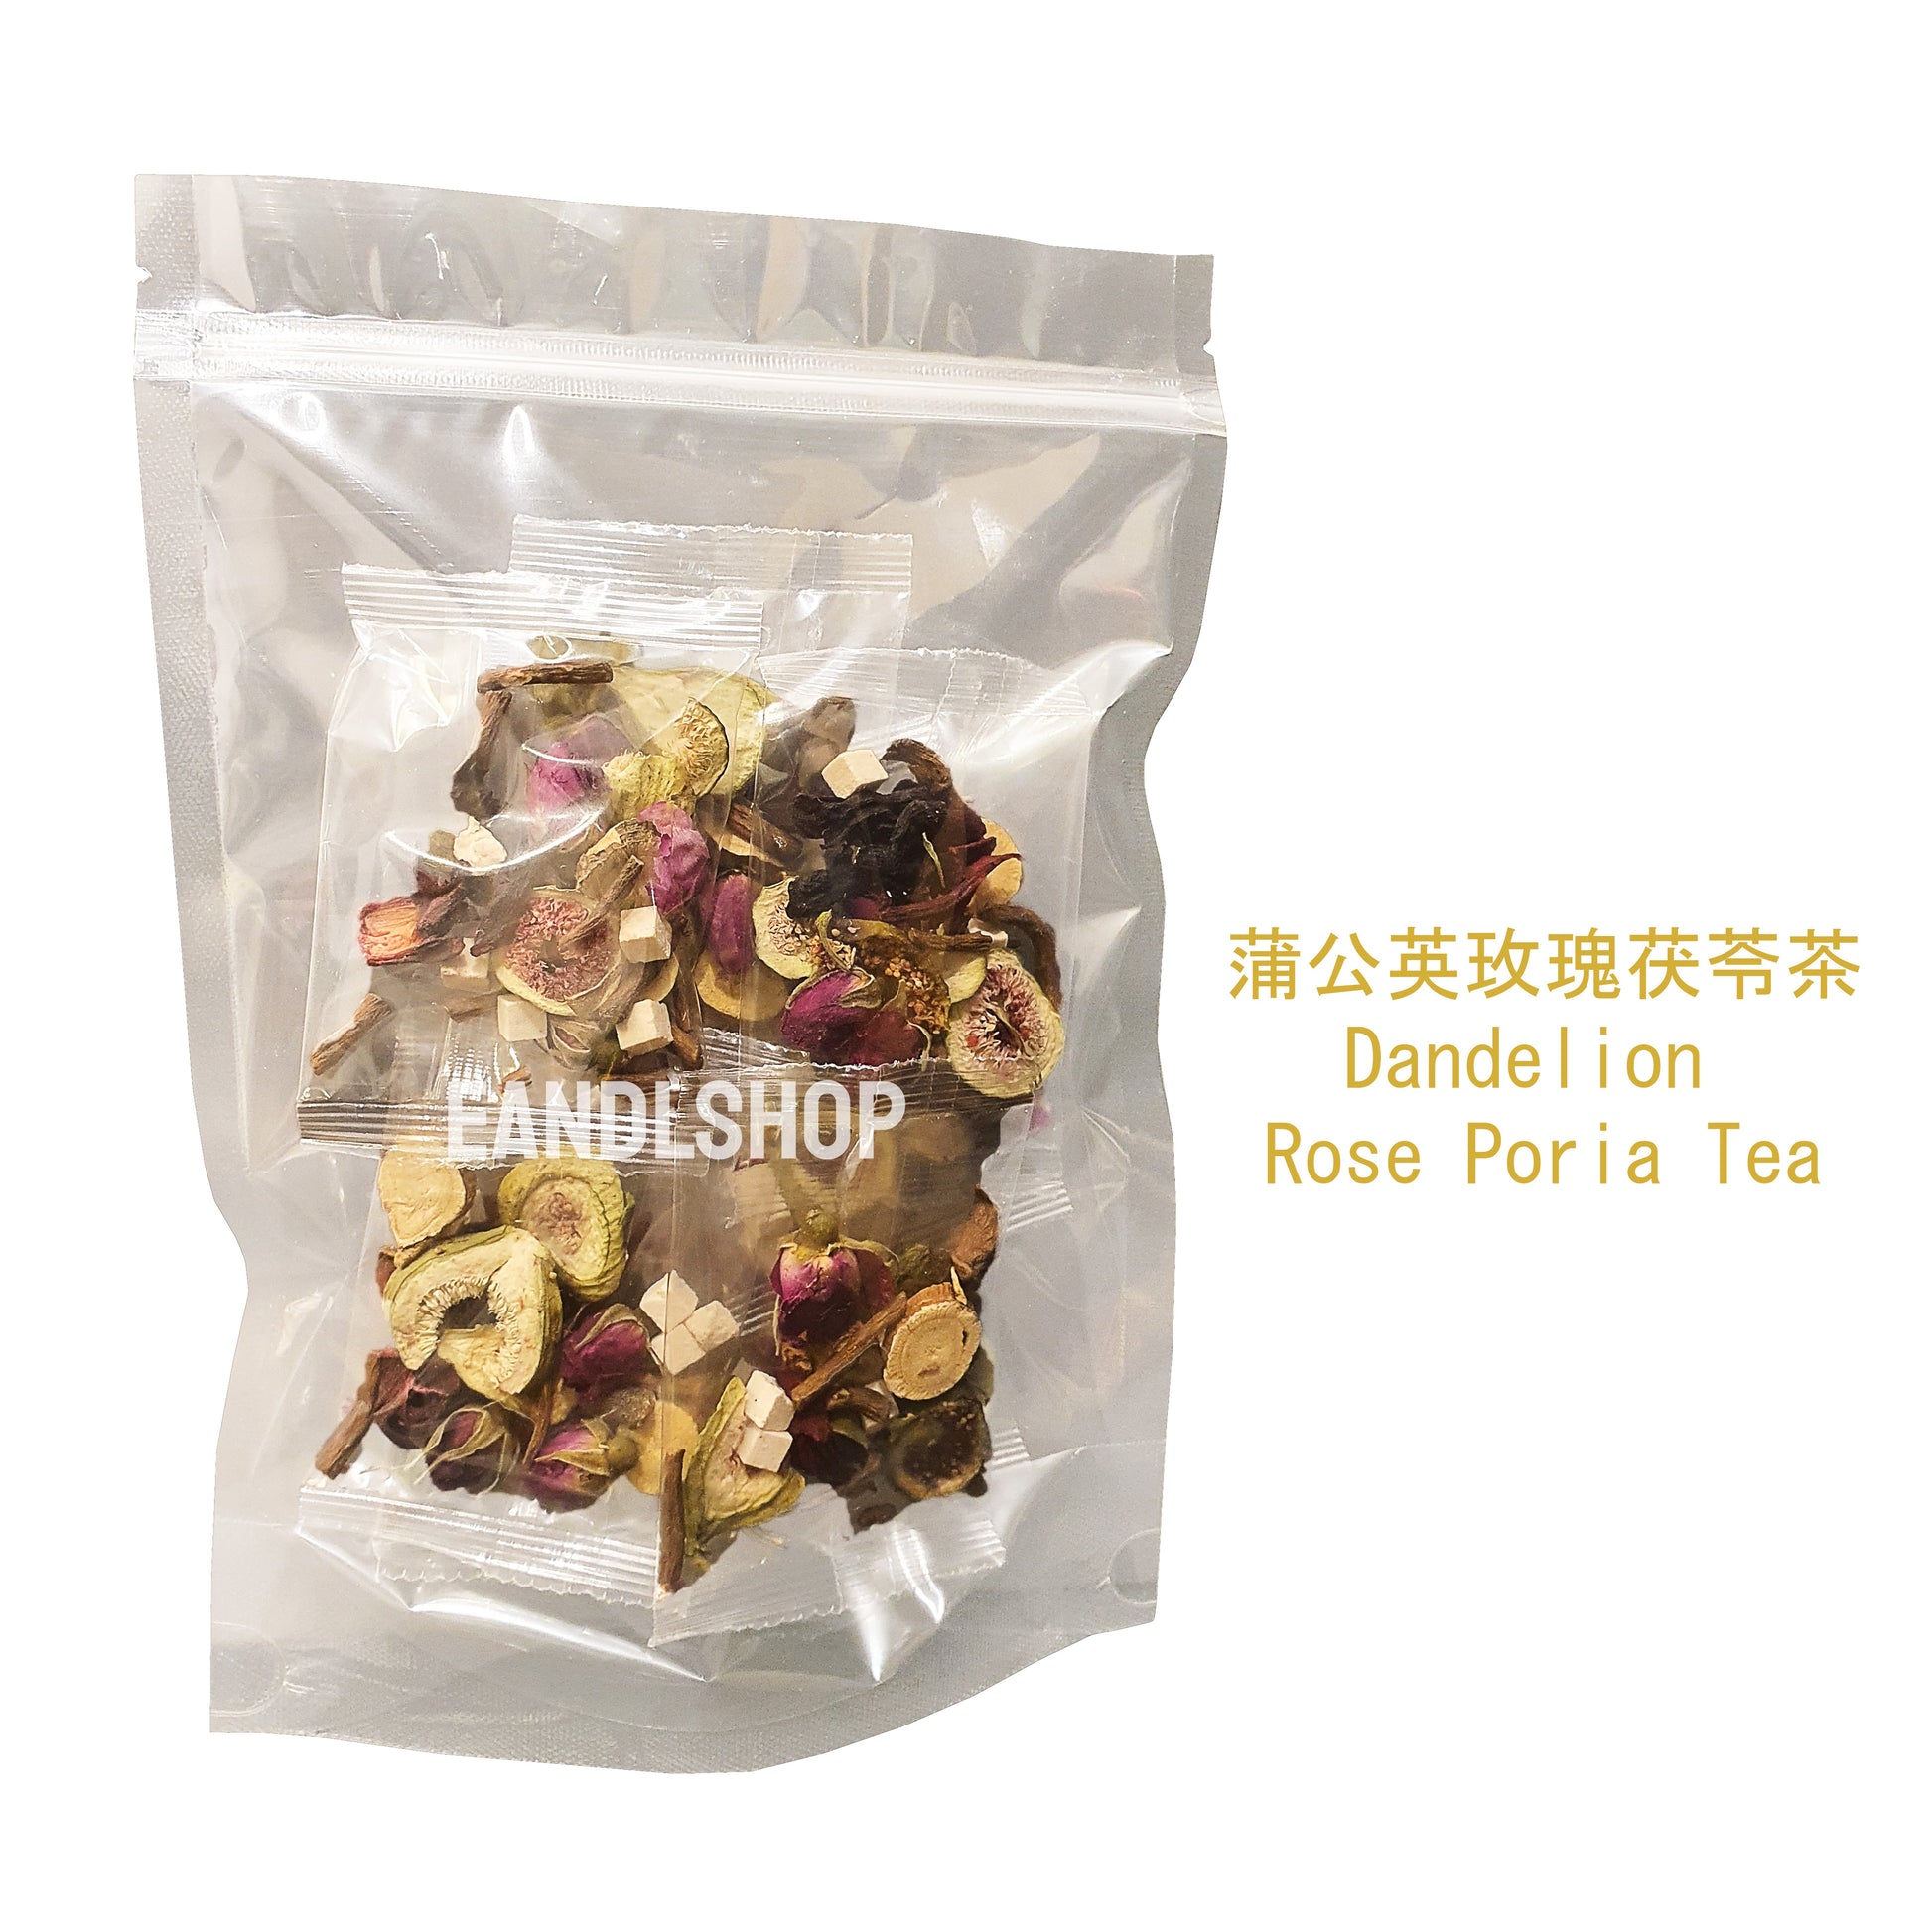 Dandelion Rose Poria Tea. Old school biscuits, modern snacks (chips, crackers), cakes, gummies, plums, dried fruits, nuts, herbal tea – available at www.EANDLSHOP.com